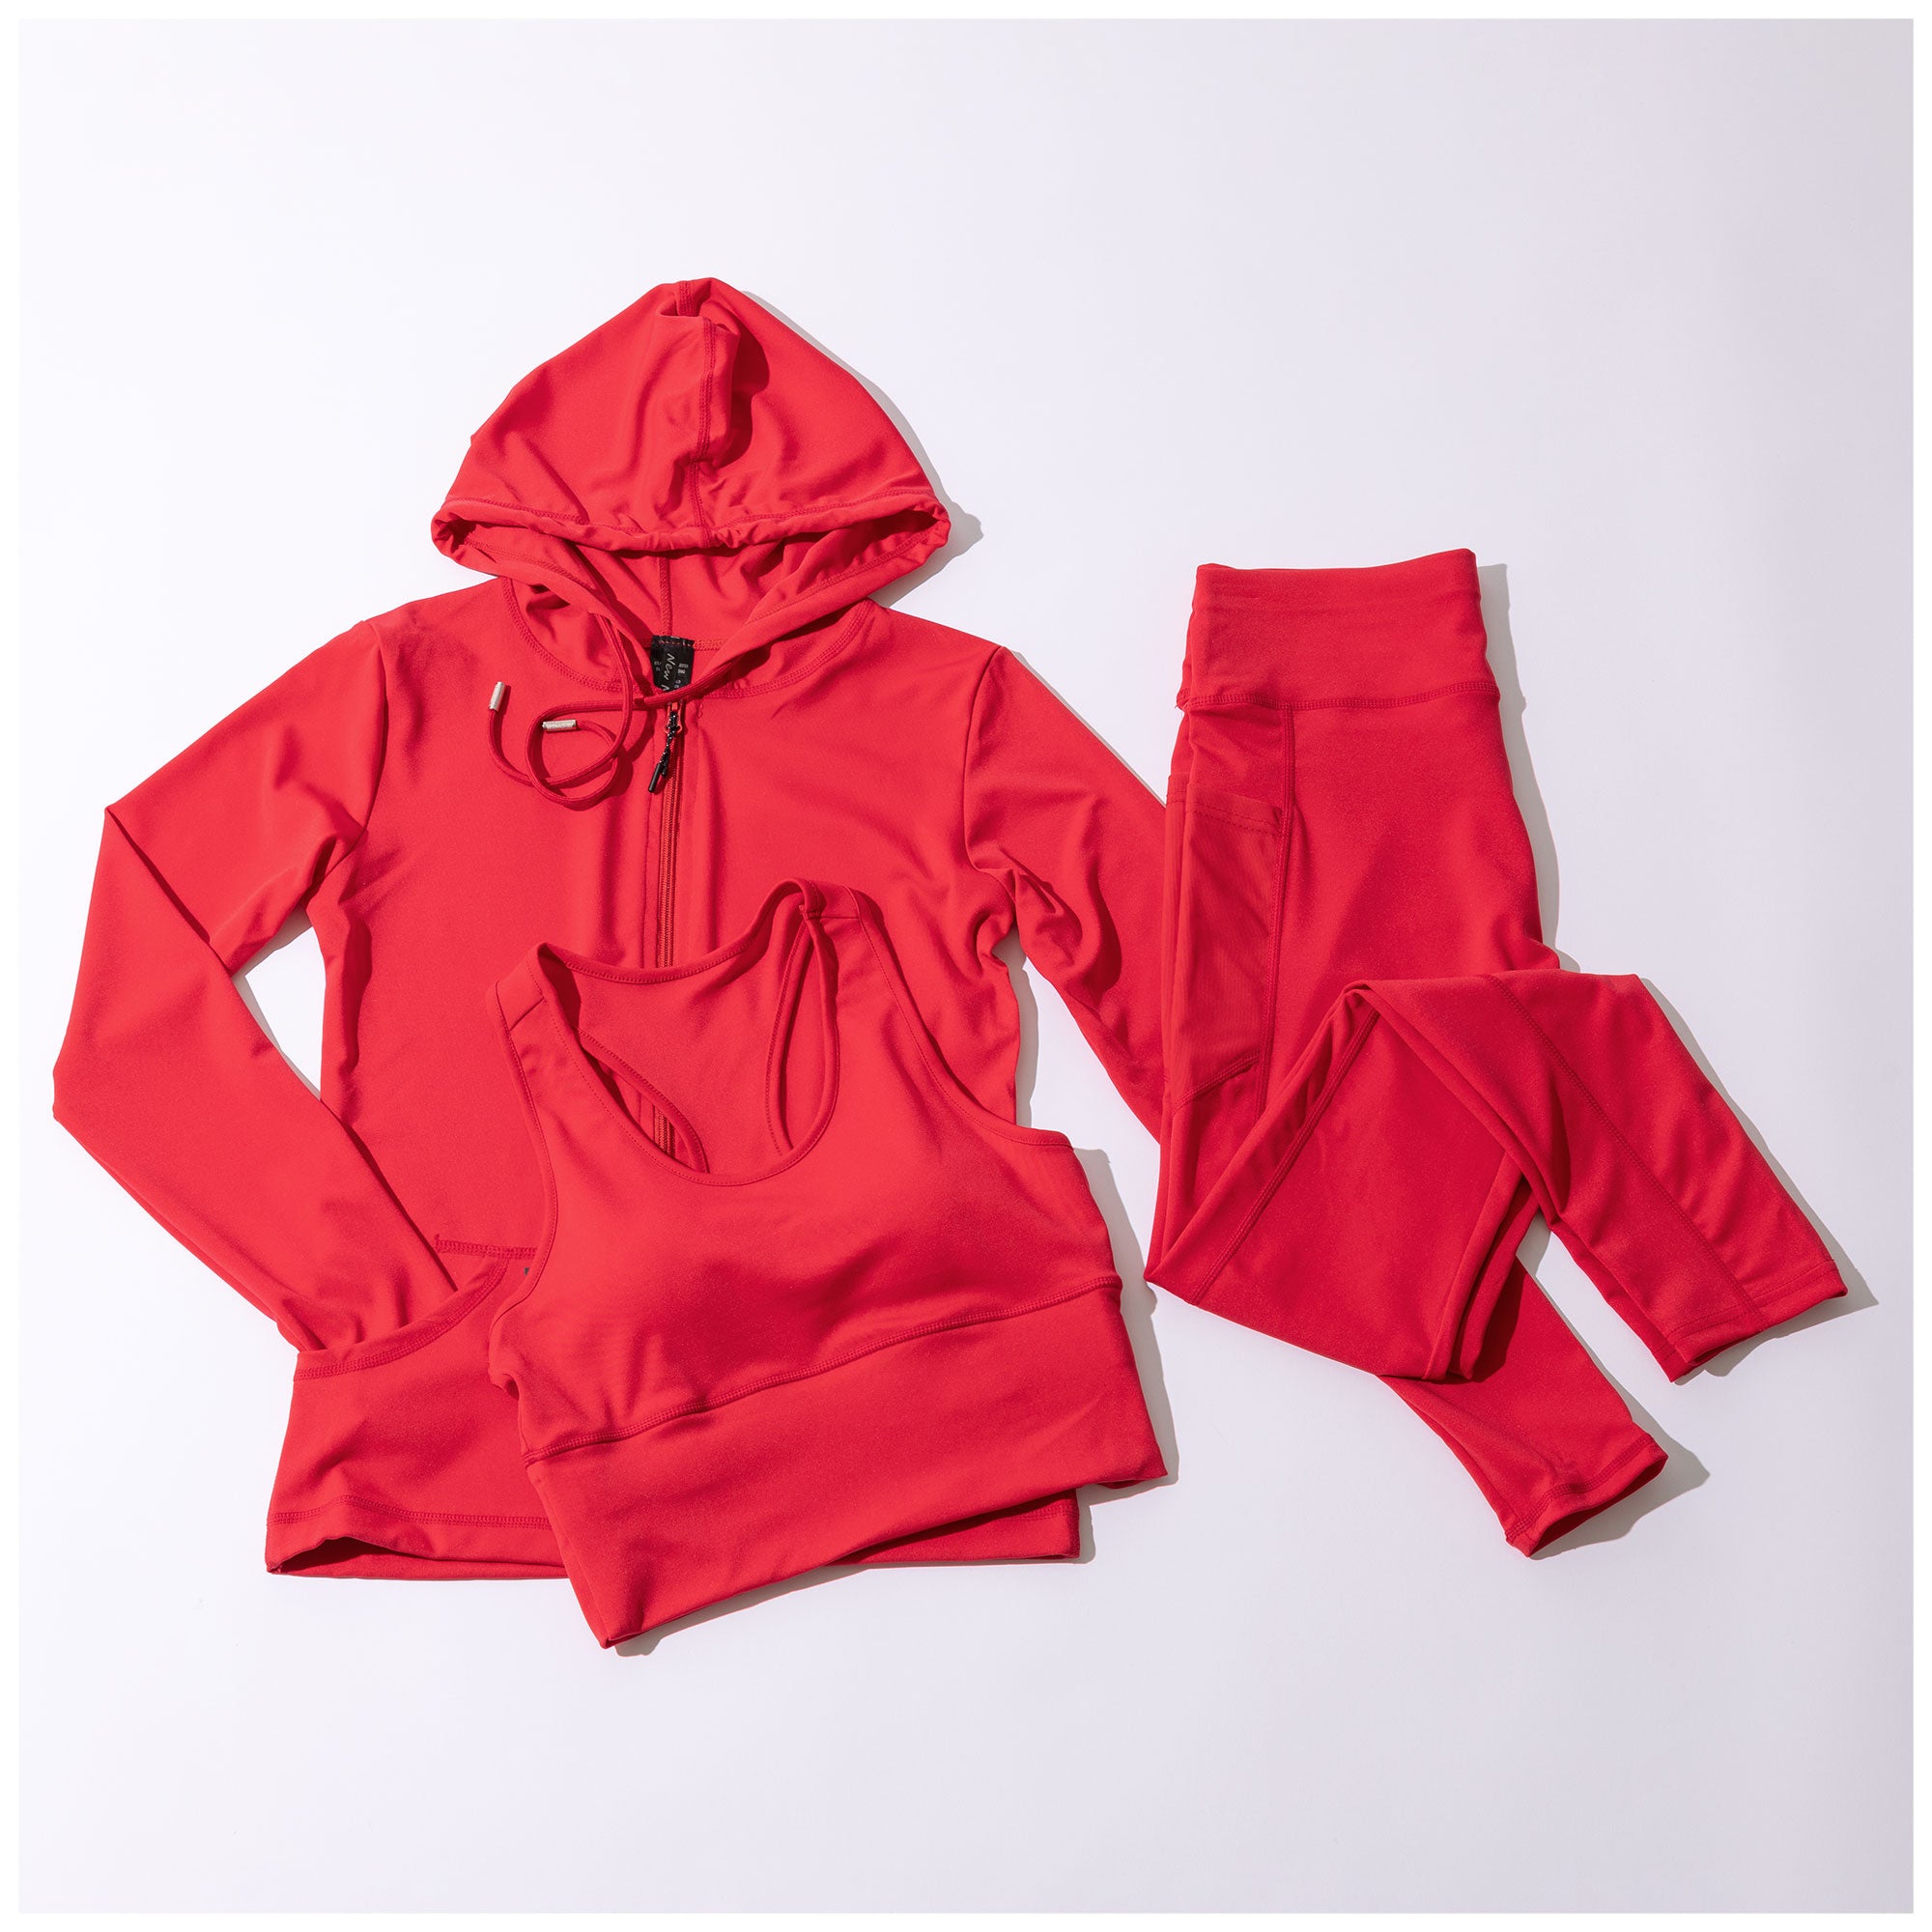 Complete 3-Piece Activewear Set - Red - S/M